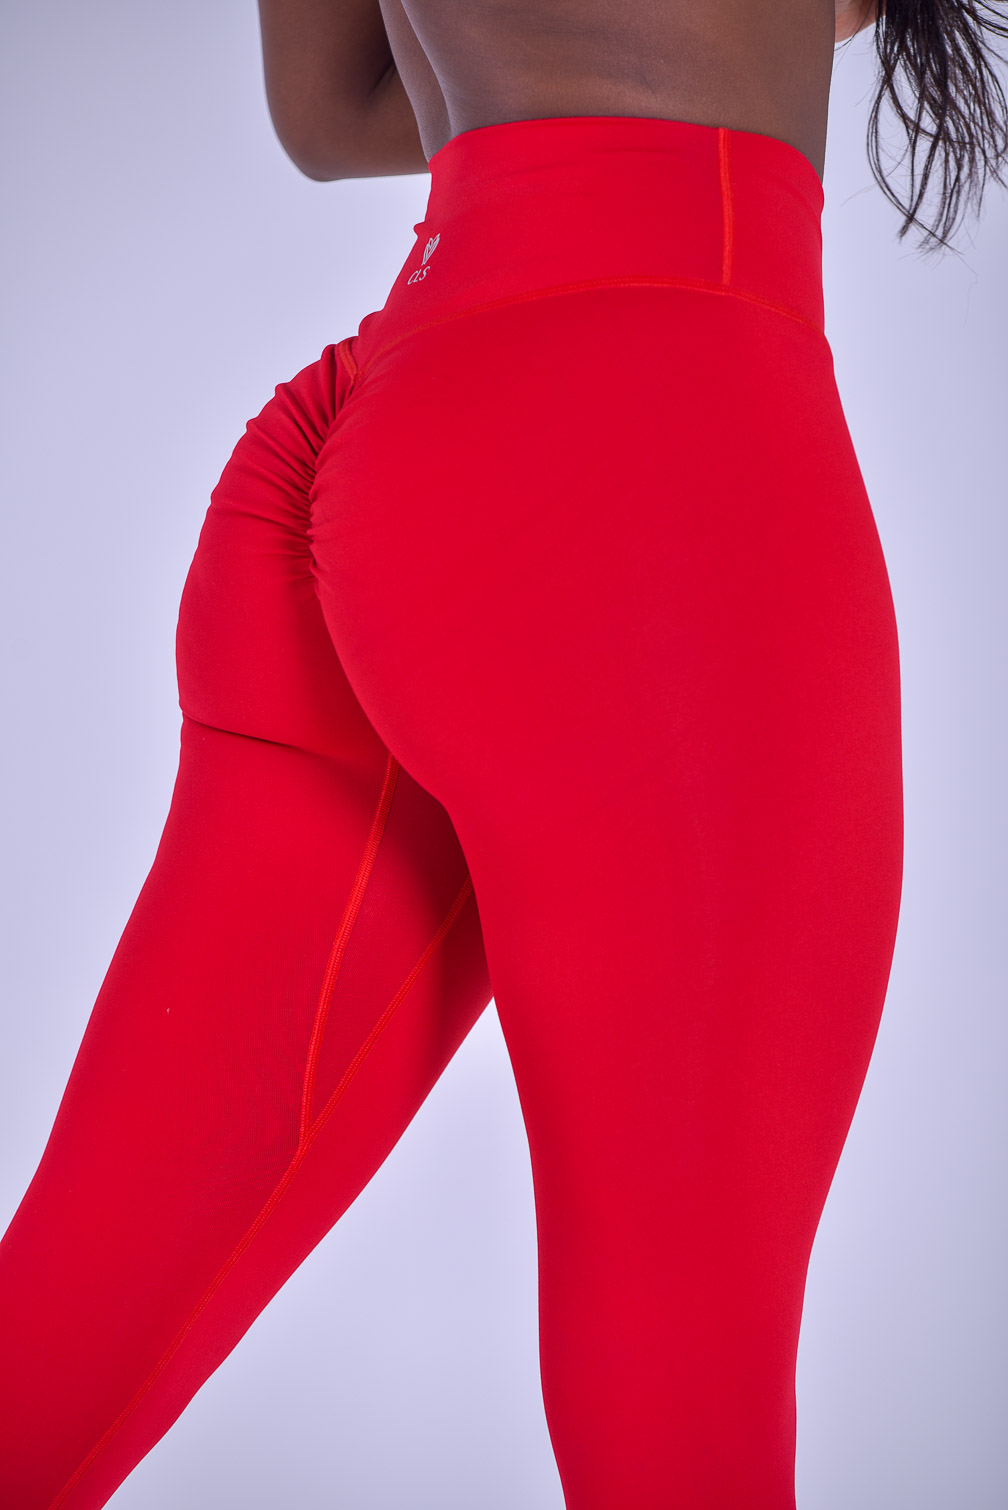 NWT! CLS Sportswear AEROBIC RED STRIPED LEGGINGS Scrunched V-cut Cropped  7/8 S